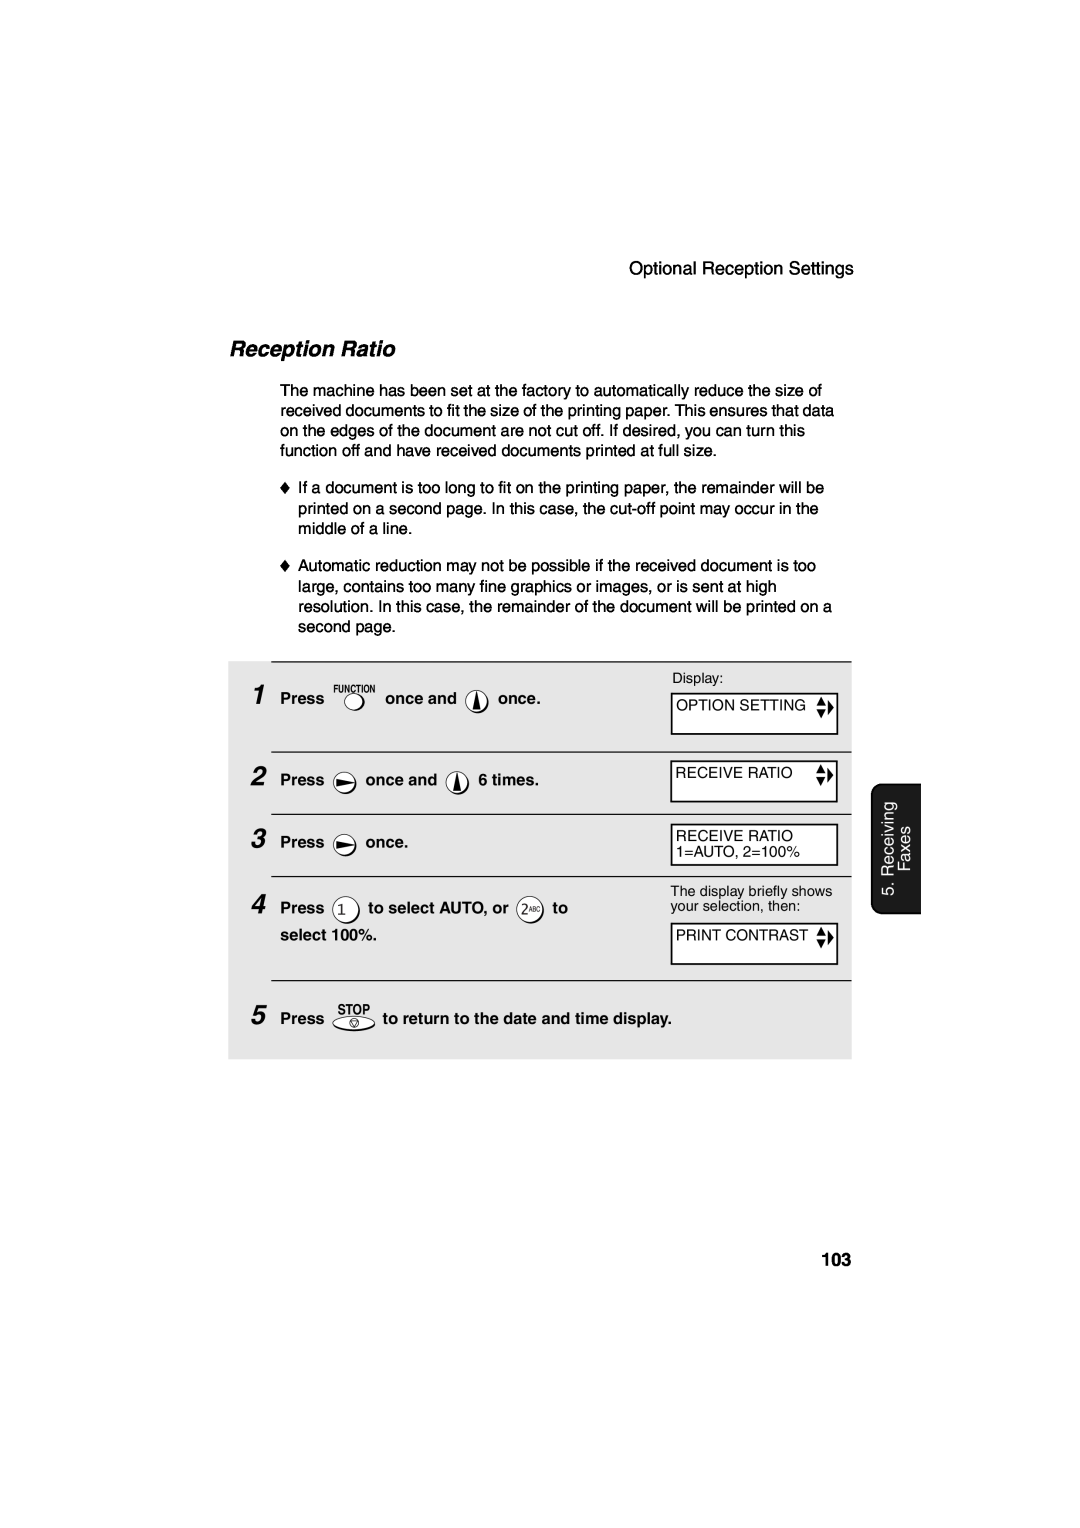 Sharp UX-CD600 operation manual Reception Ratio, Receiving, Faxes 